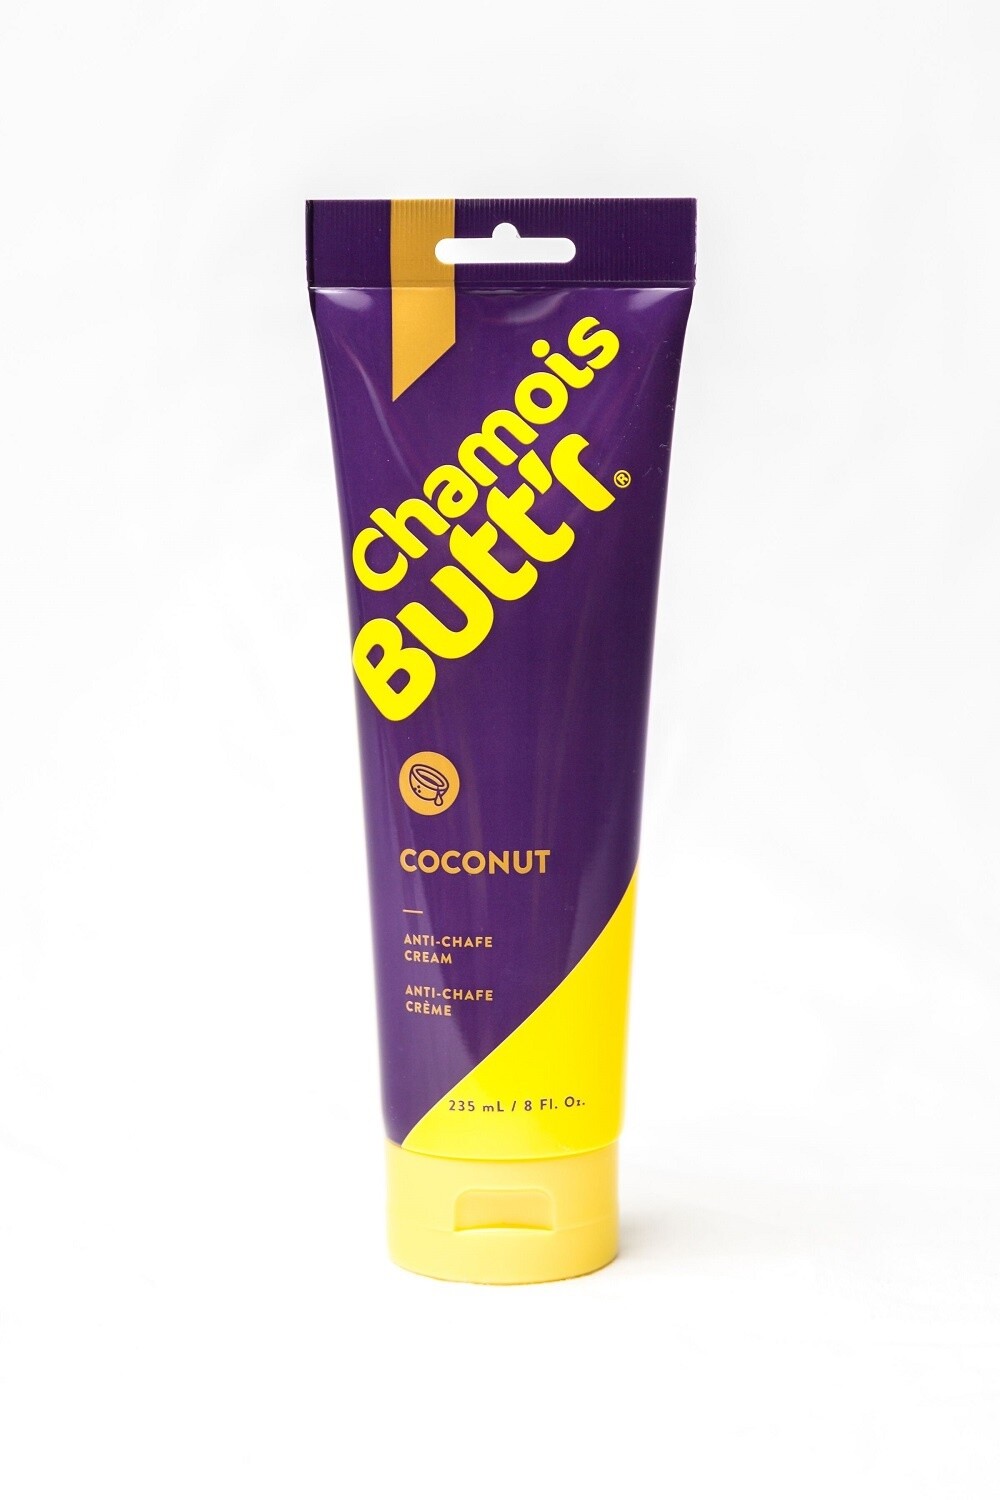 Chamios Butt'r Coconut Anti-chafe Cream